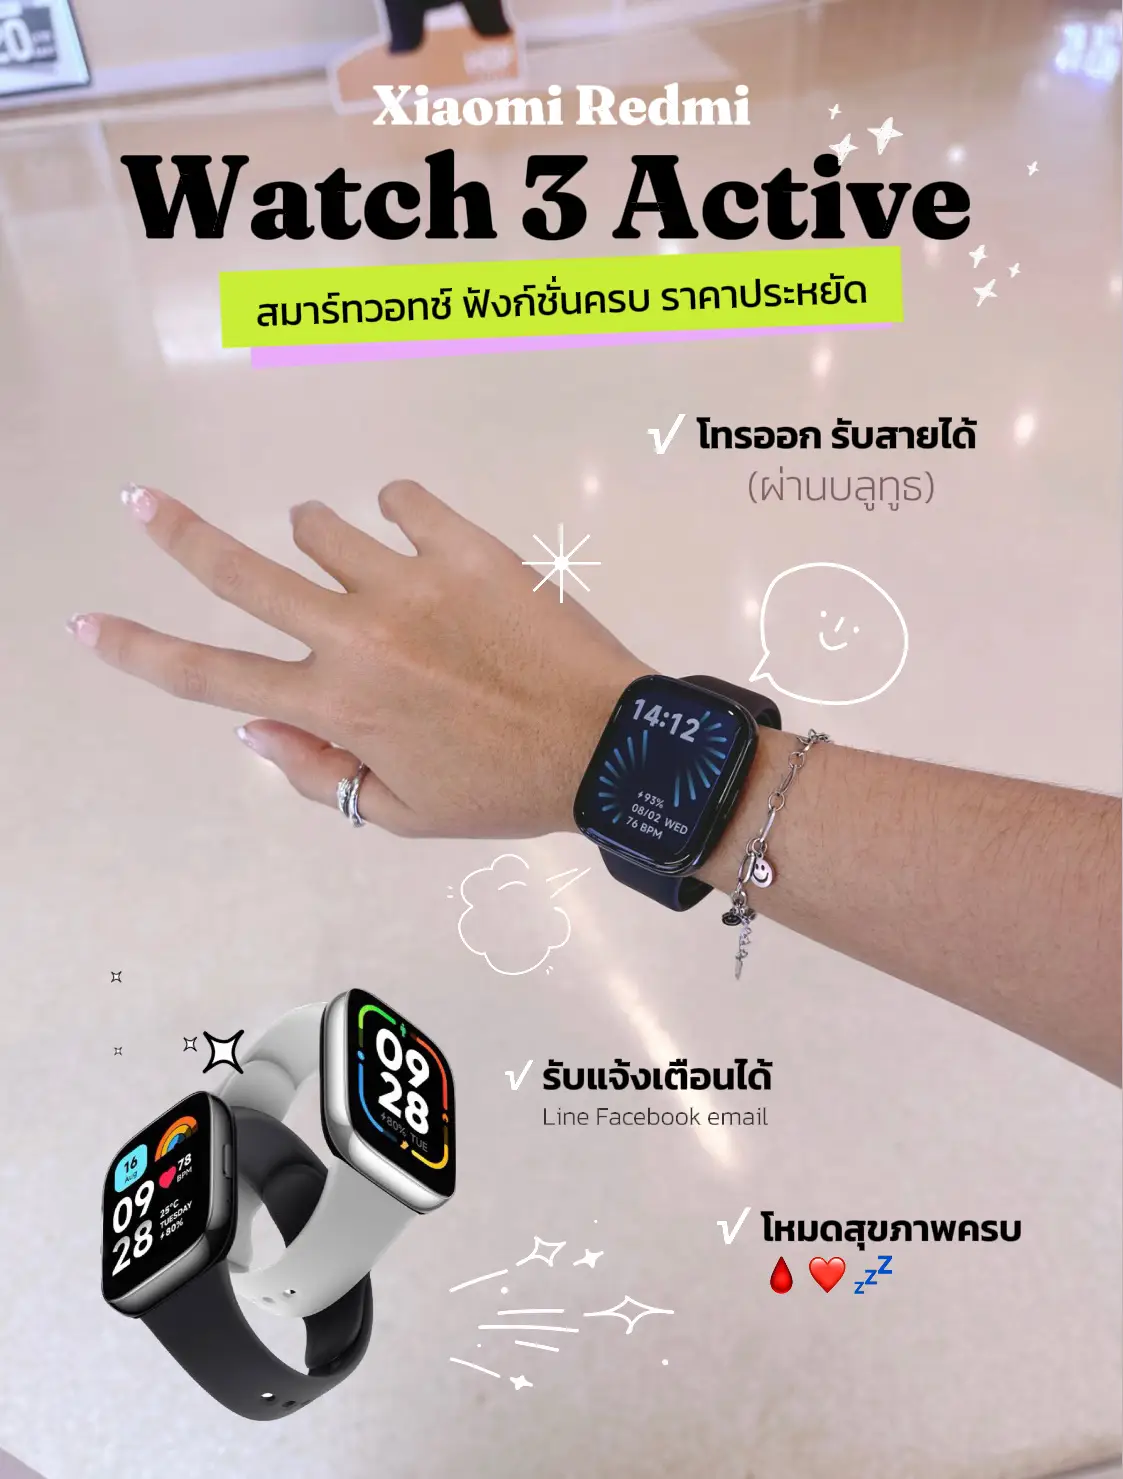 Redmi Watch 3 Active]Product Info - UK